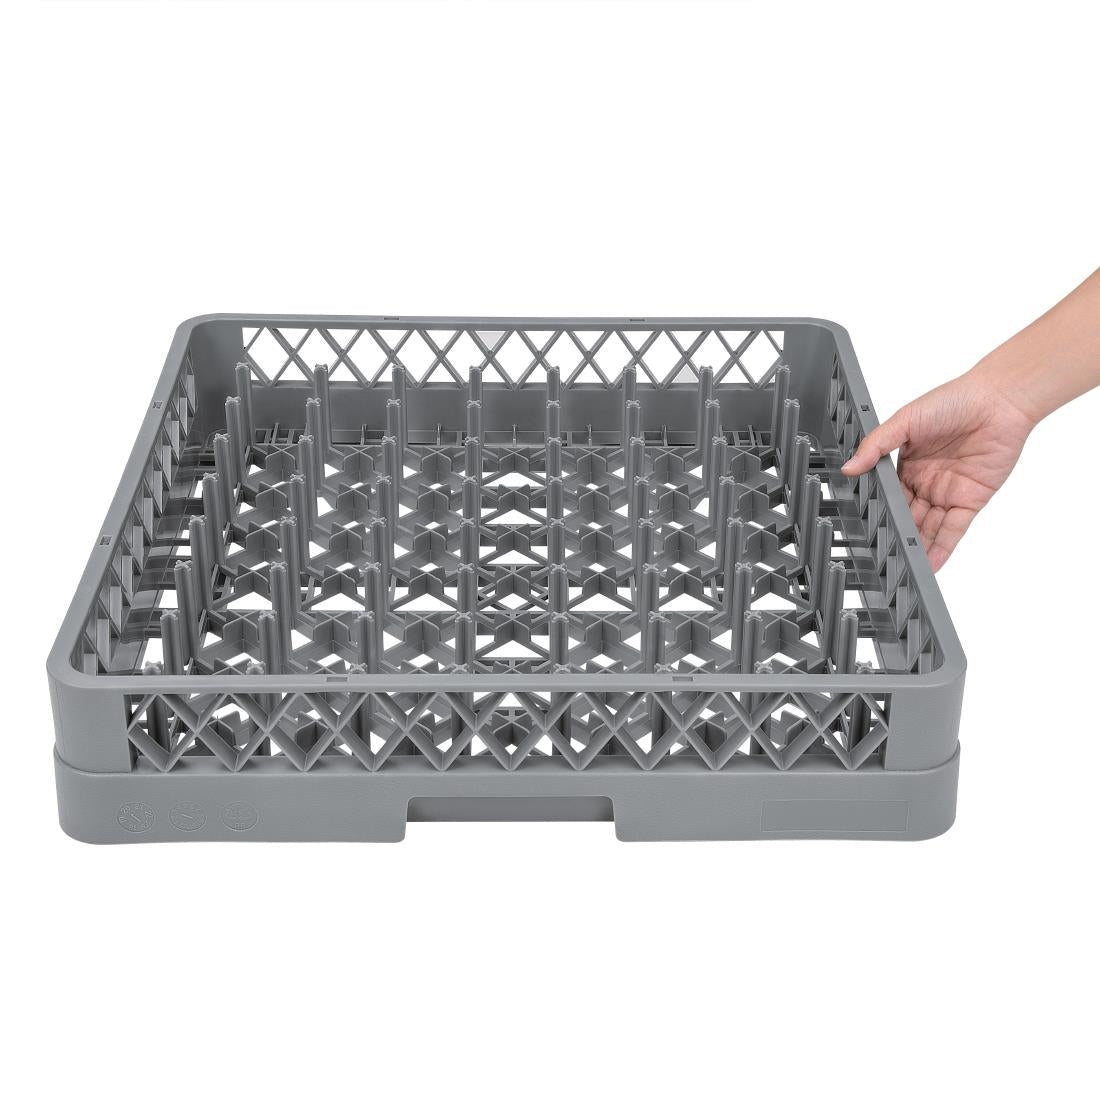 K909 Vogue Plate Dishwasher Rack JD Catering Equipment Solutions Ltd